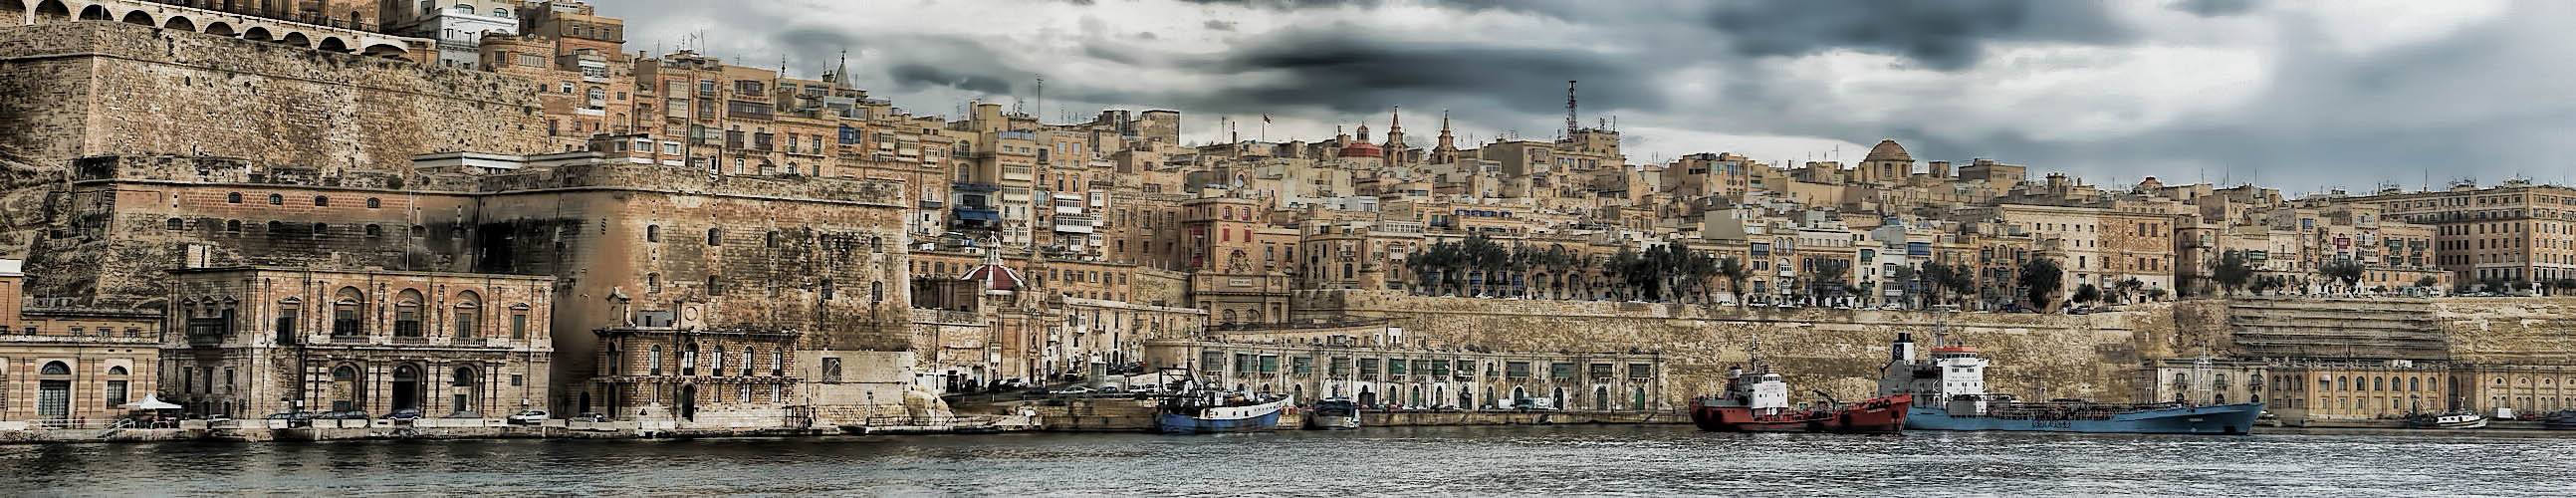 Old Malta